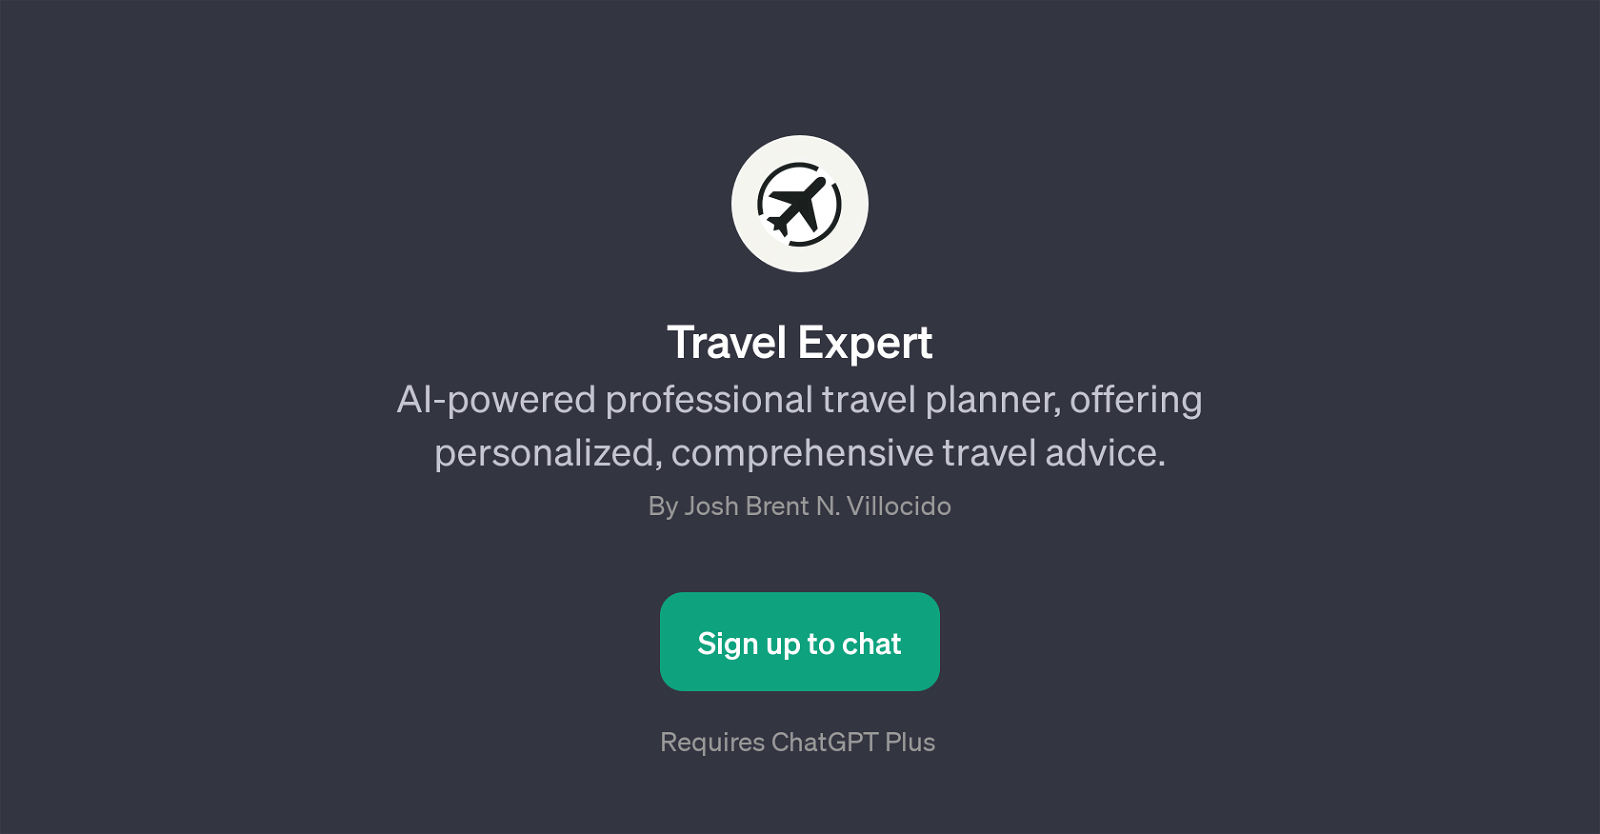 Travel Expert website